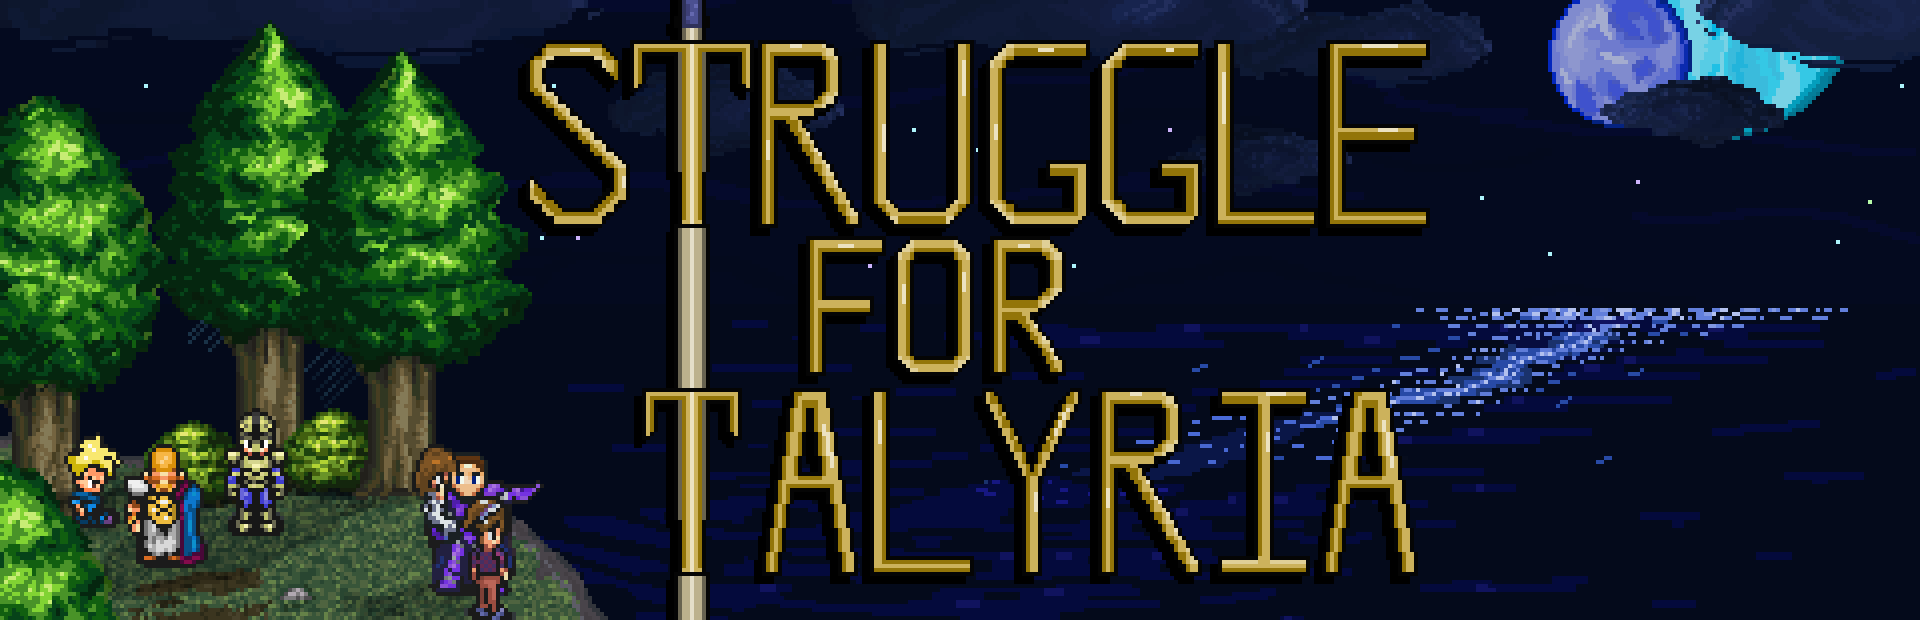 Struggle for Talyria